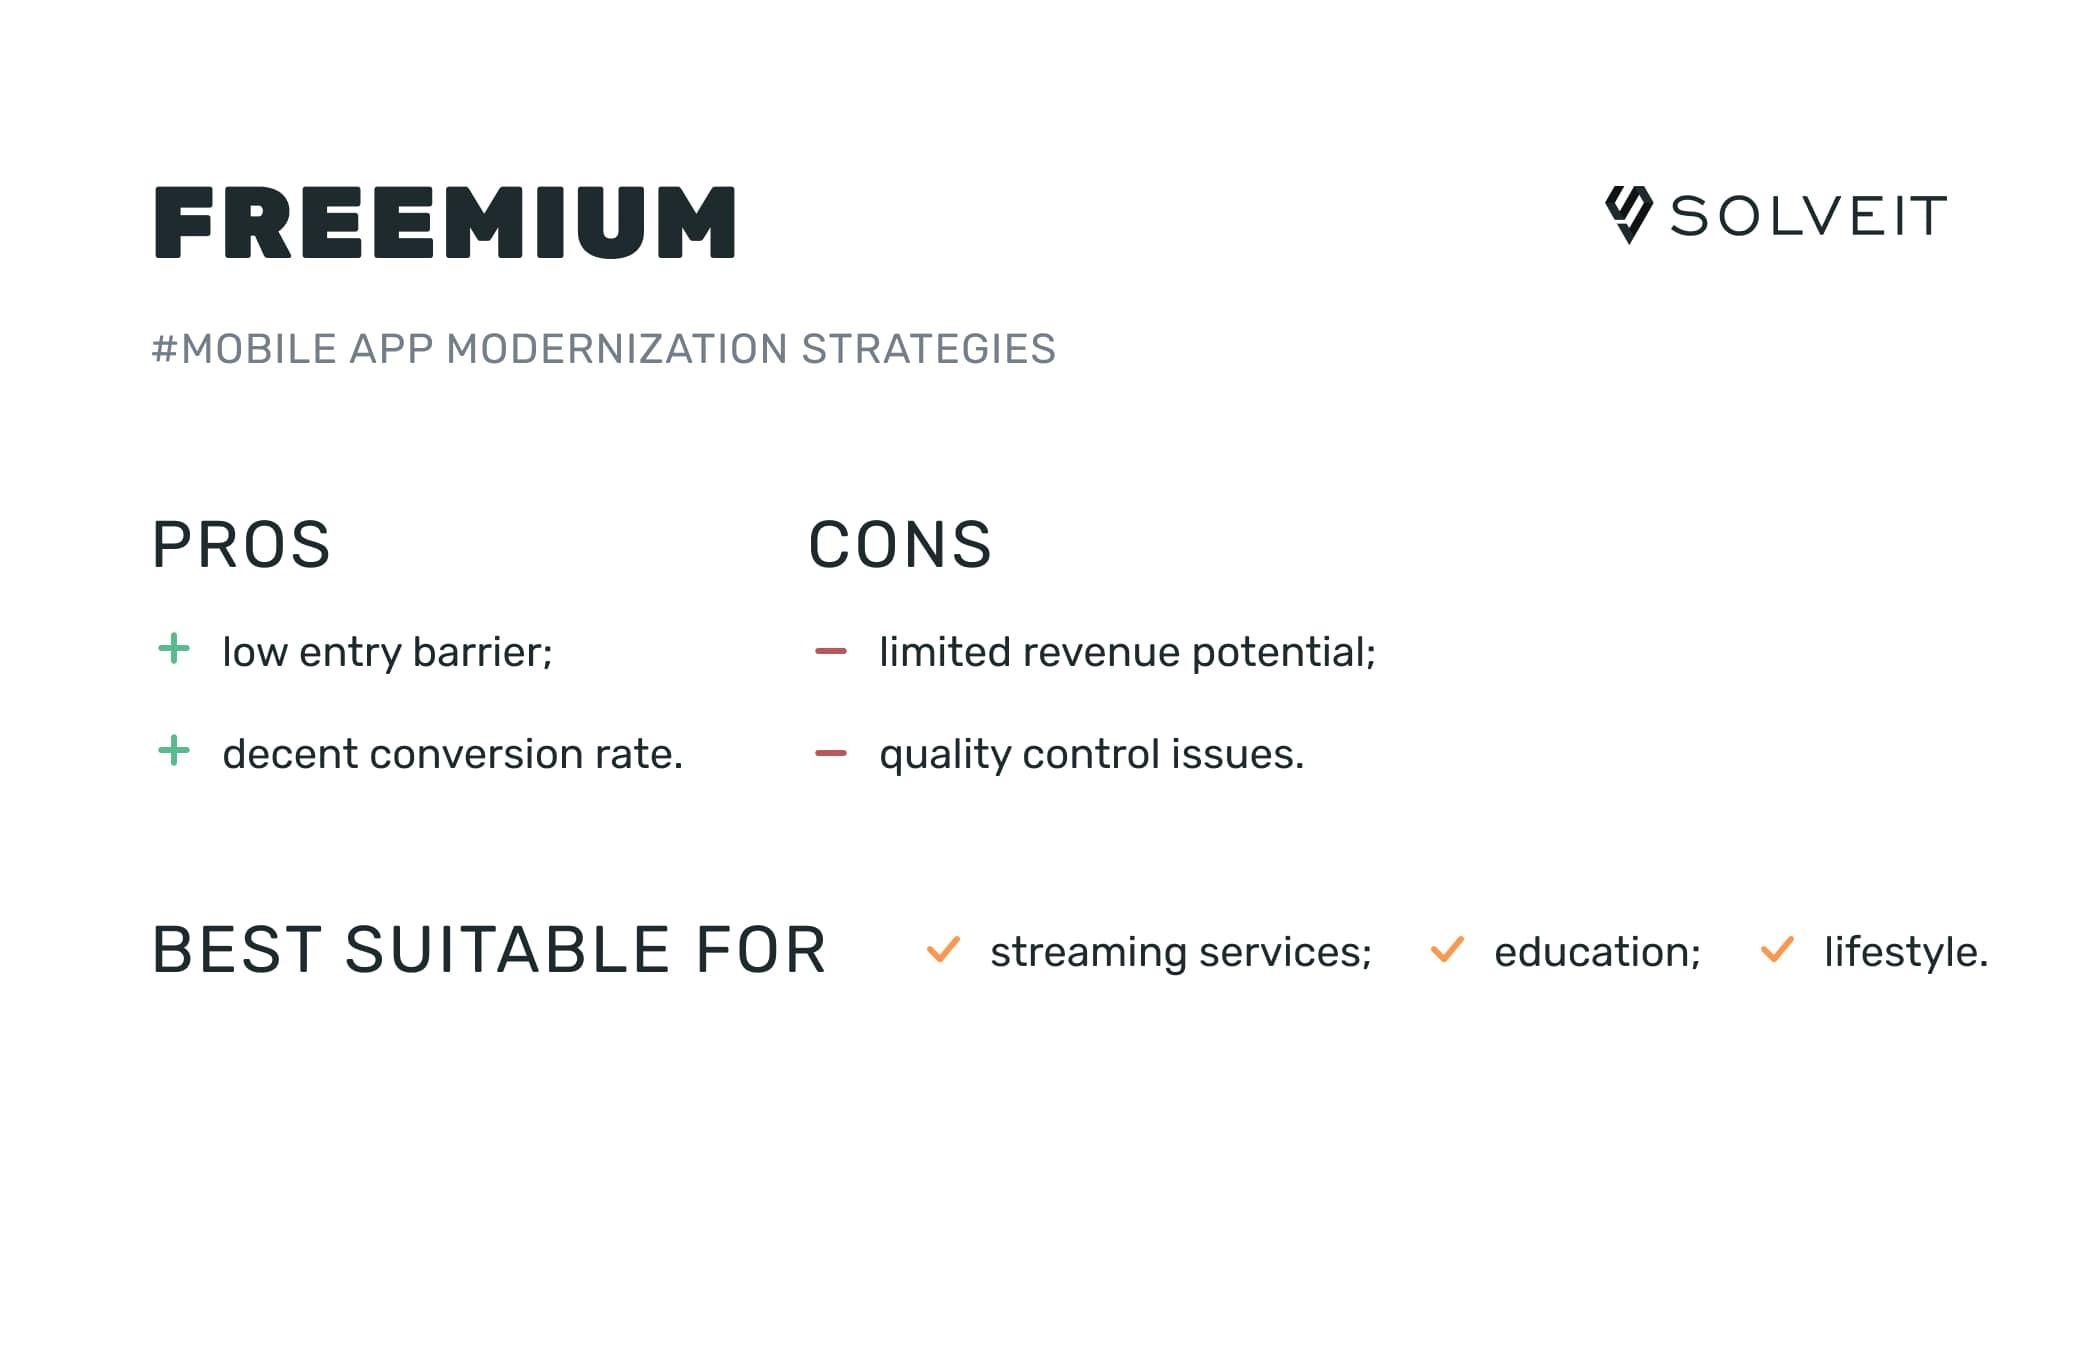 Mobile app monetization strategy: Freemium